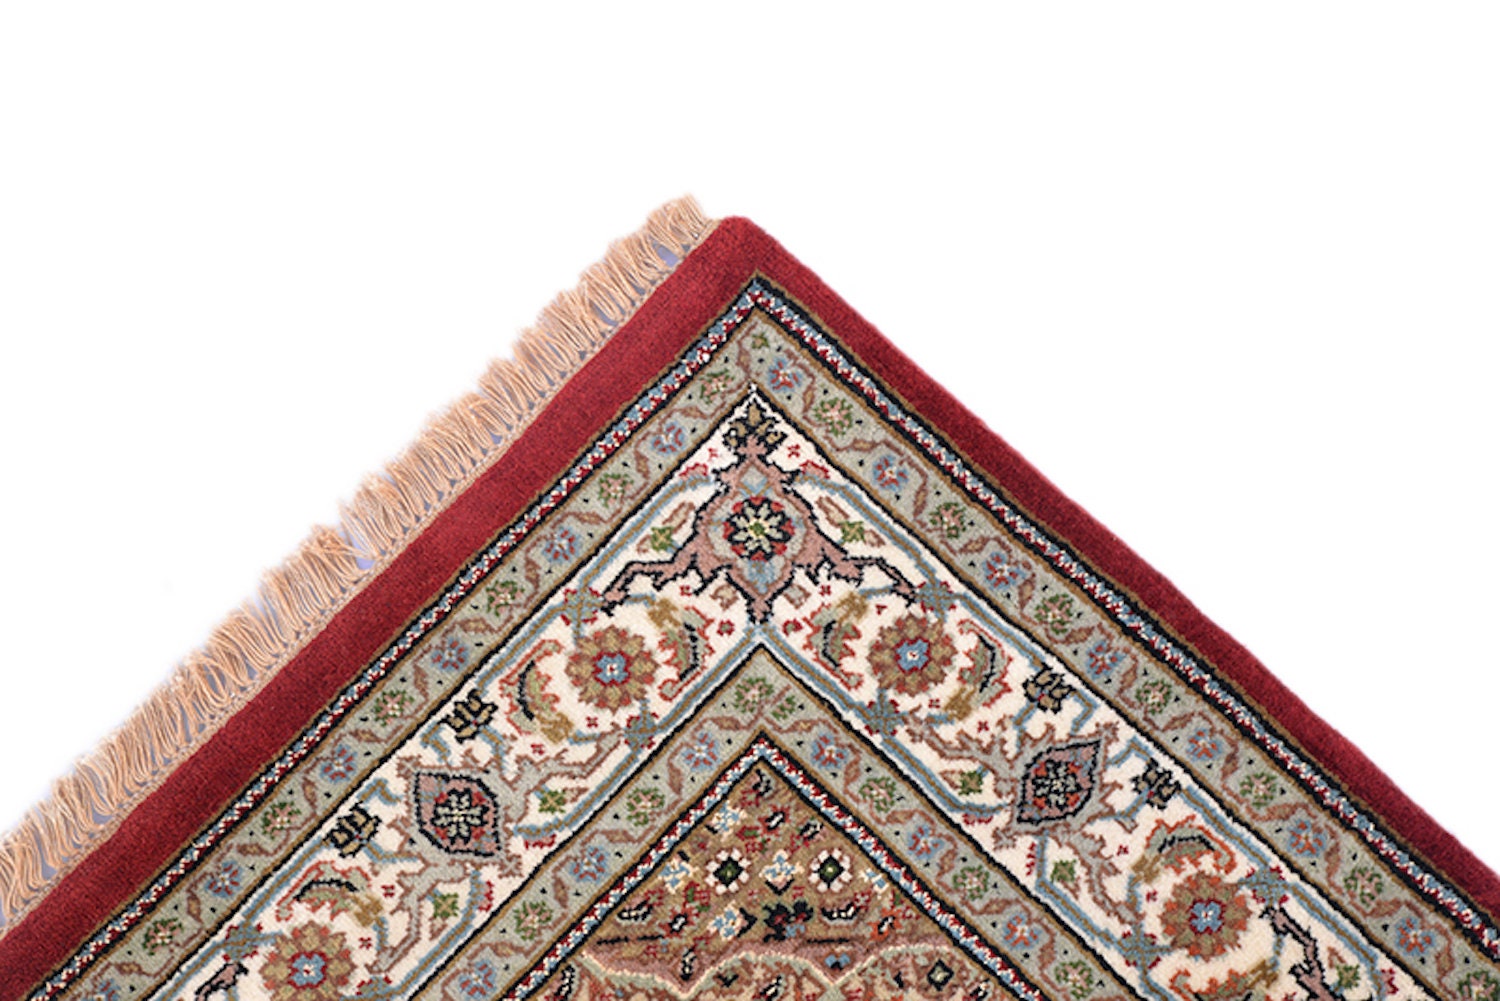 Oriental Handmade Rug | 3x5 Rug | Traditional Persian Pakistan Style | Red Beige Rug | Medallion Wool Rug